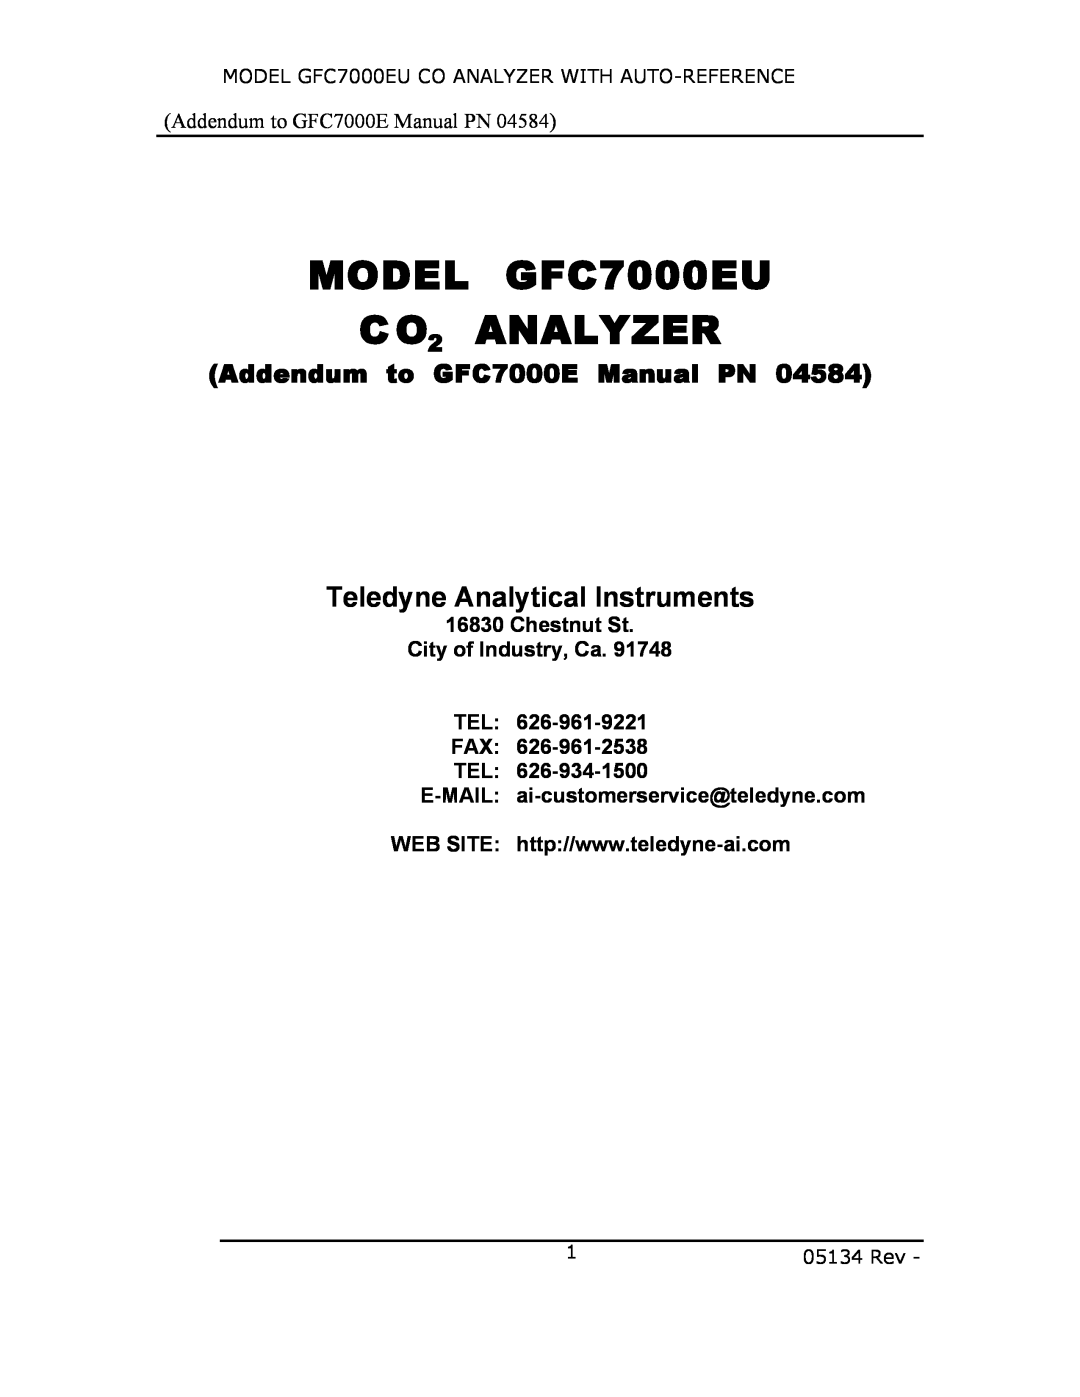 Teledyne manual Teledyne Analytical Instruments, MODEL GFC7000EU CO2 ANALYZER, Addendum to GFC7000E Manual PN 